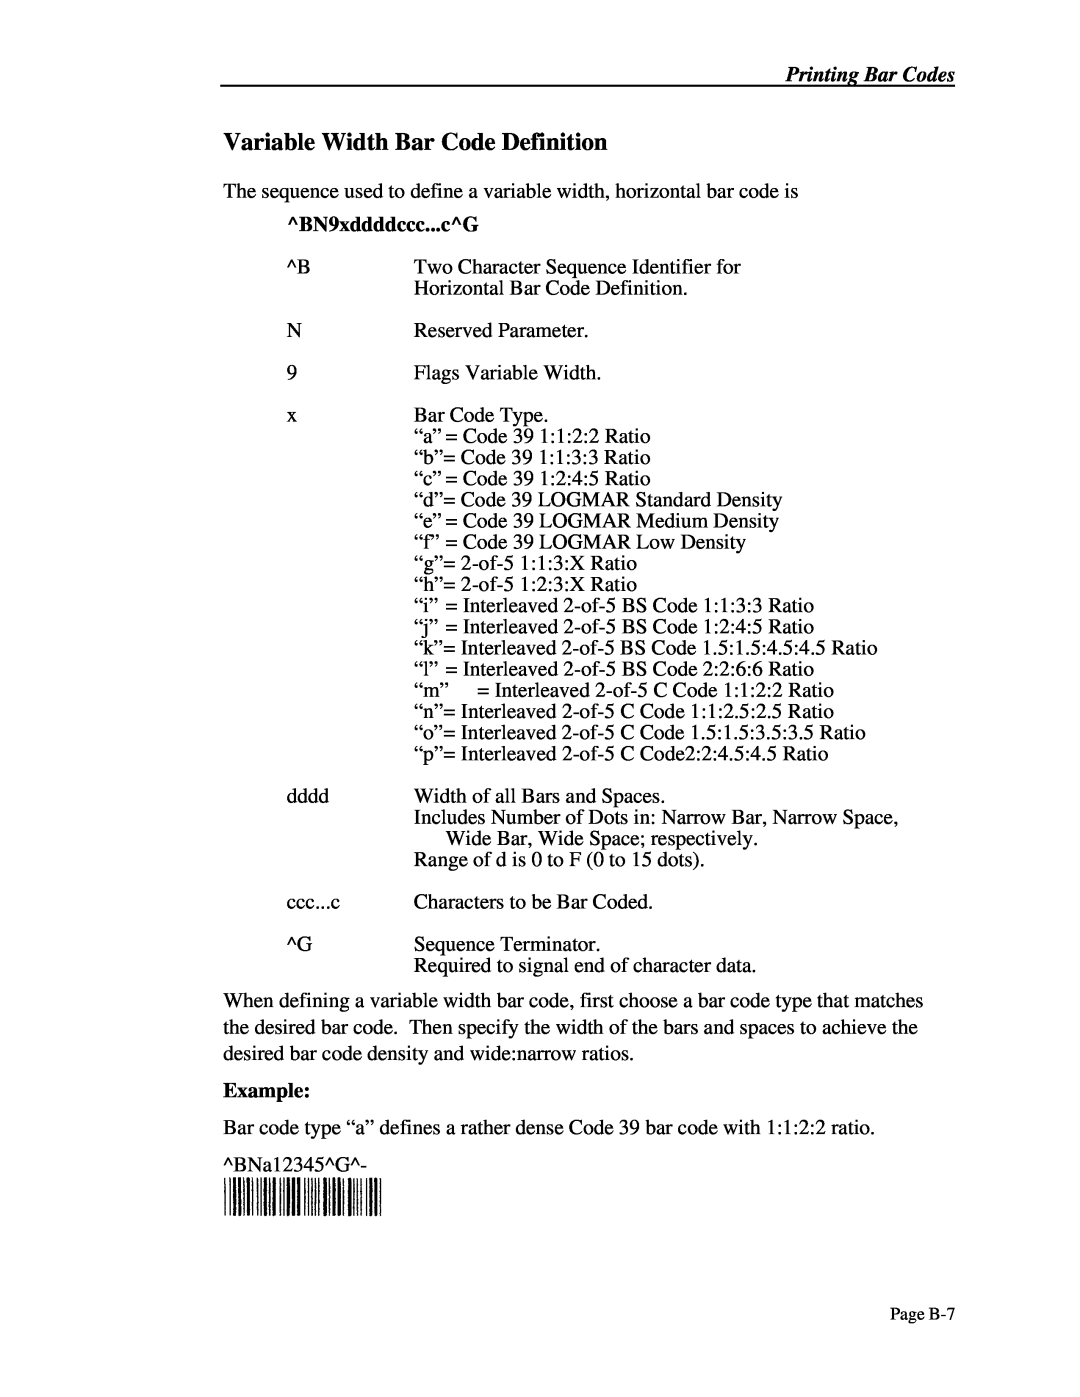 Printek 4503, 4300, 4500 manual Variable Width Bar Code Definition, Page B-7 